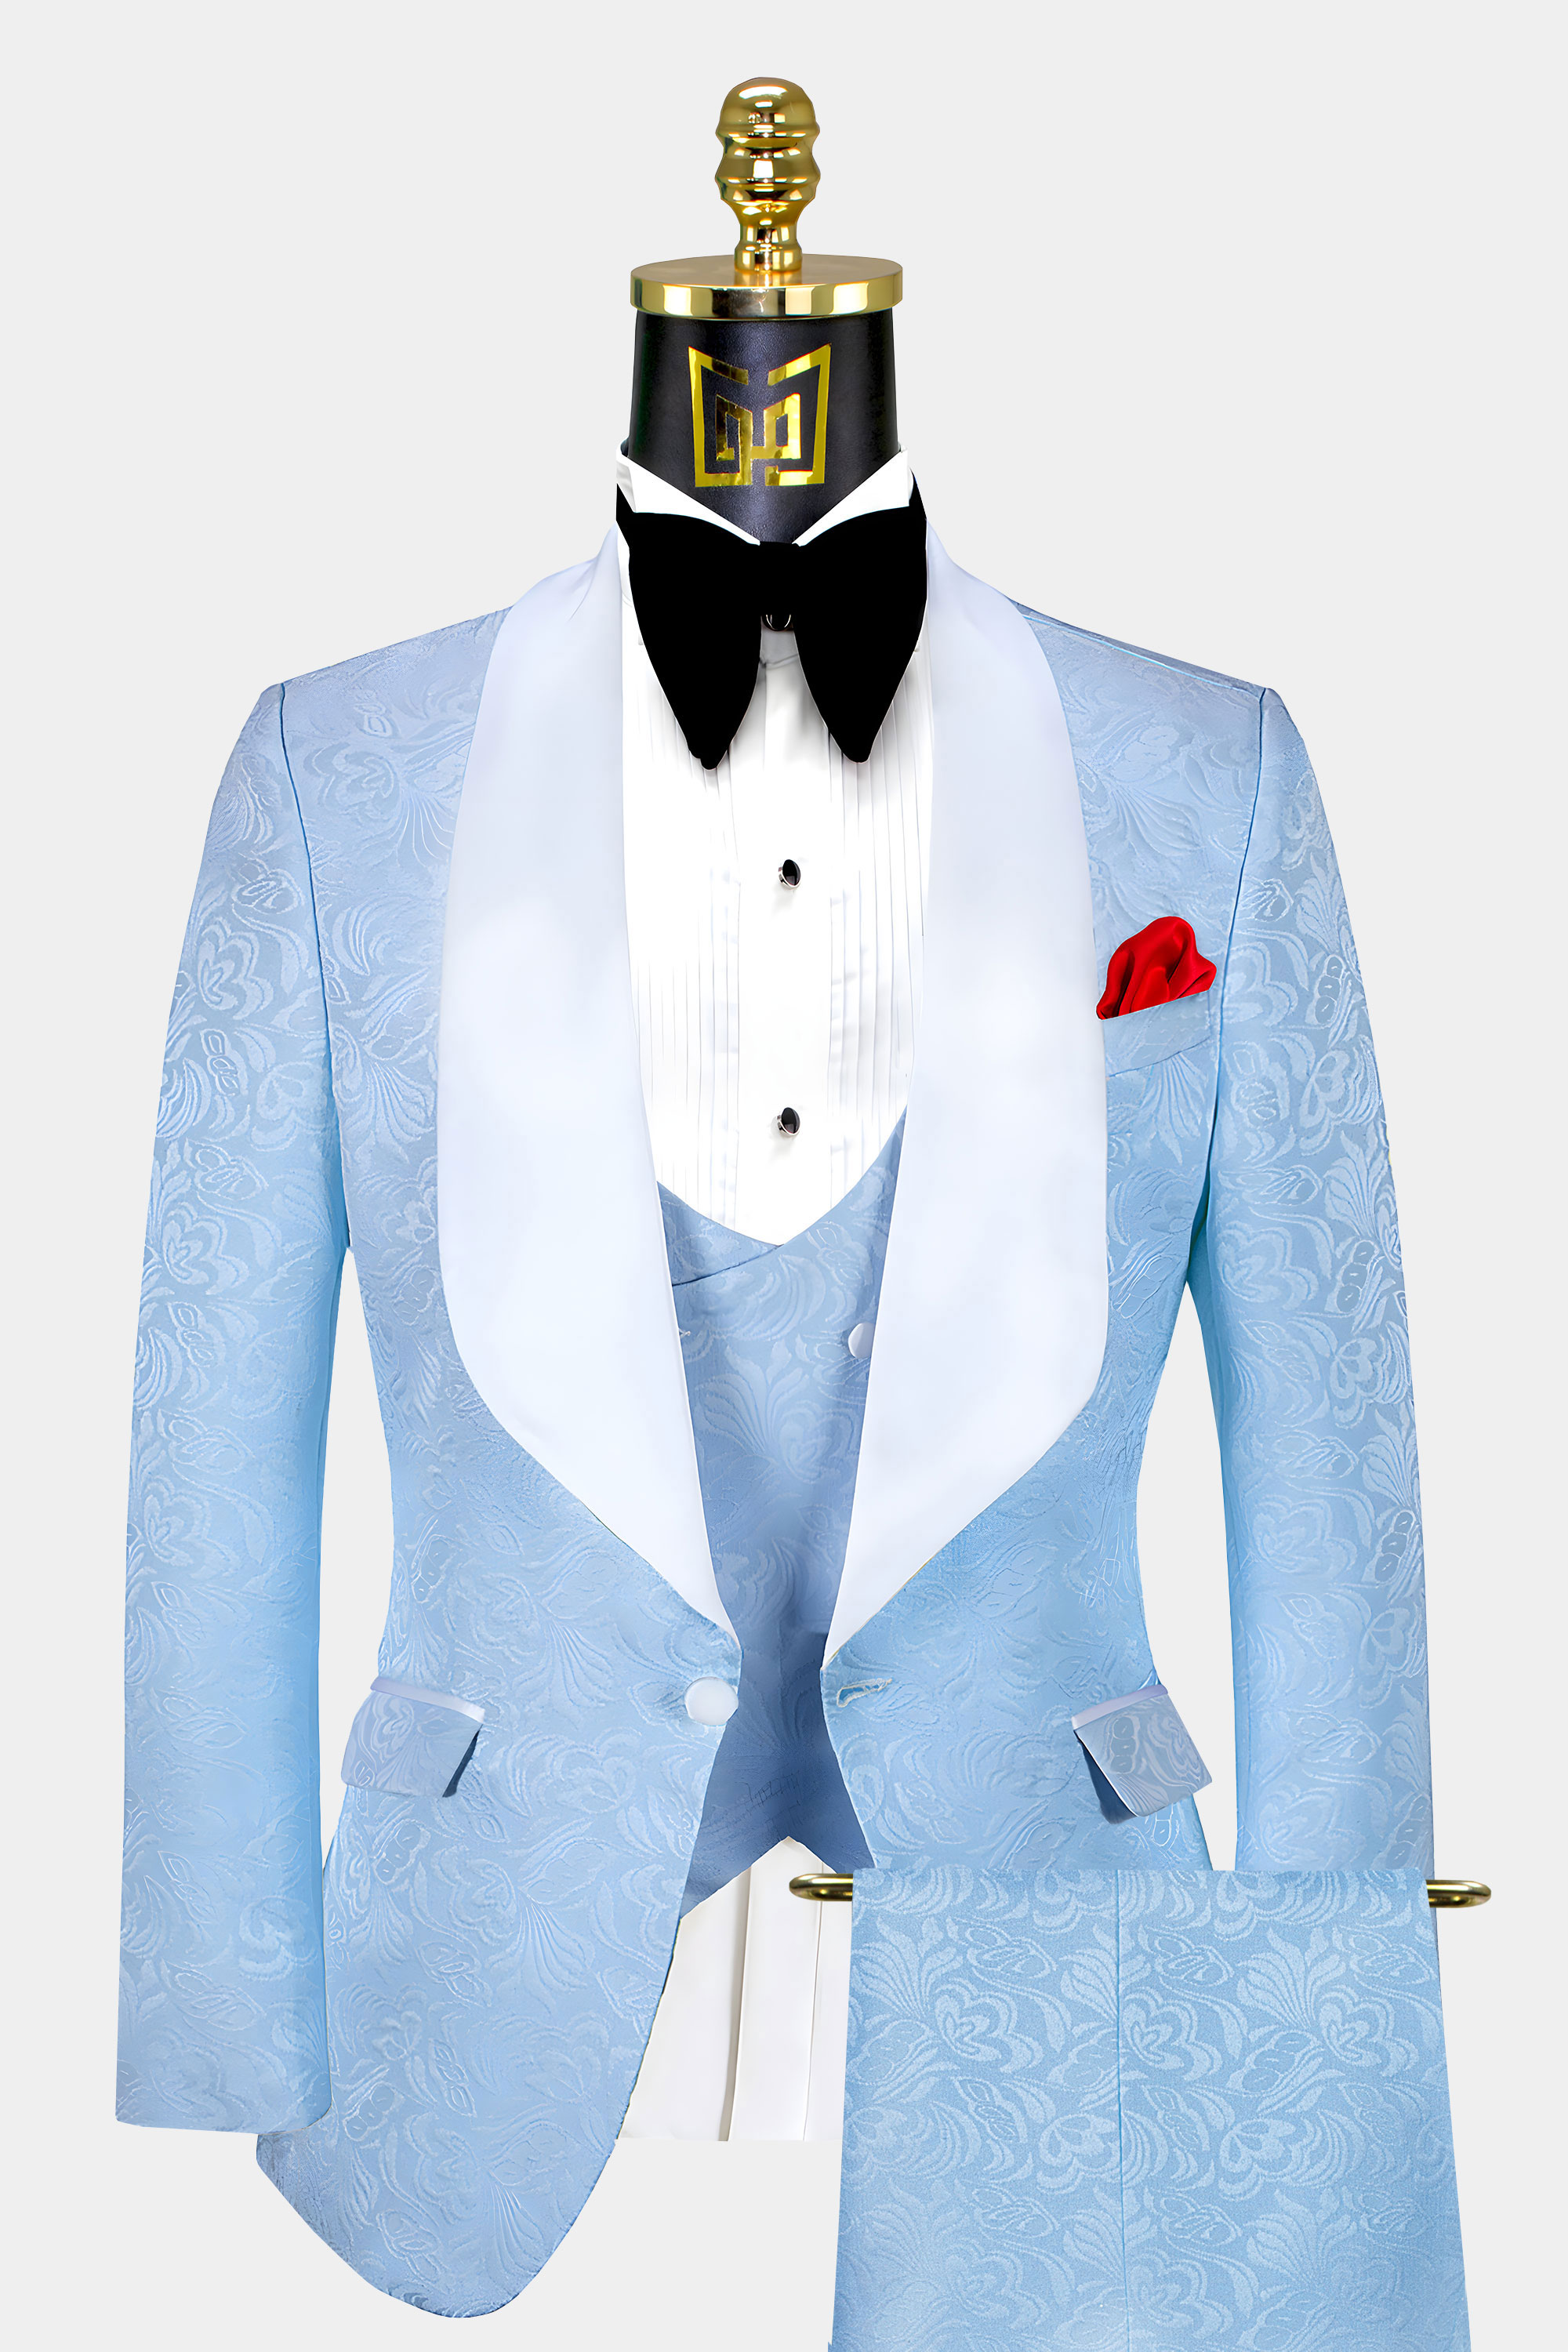 Mens-Baby-Blue-and-White-Tuxedo-Wedding-Groom-Prom-Suit-from-Gentlemansguru.com